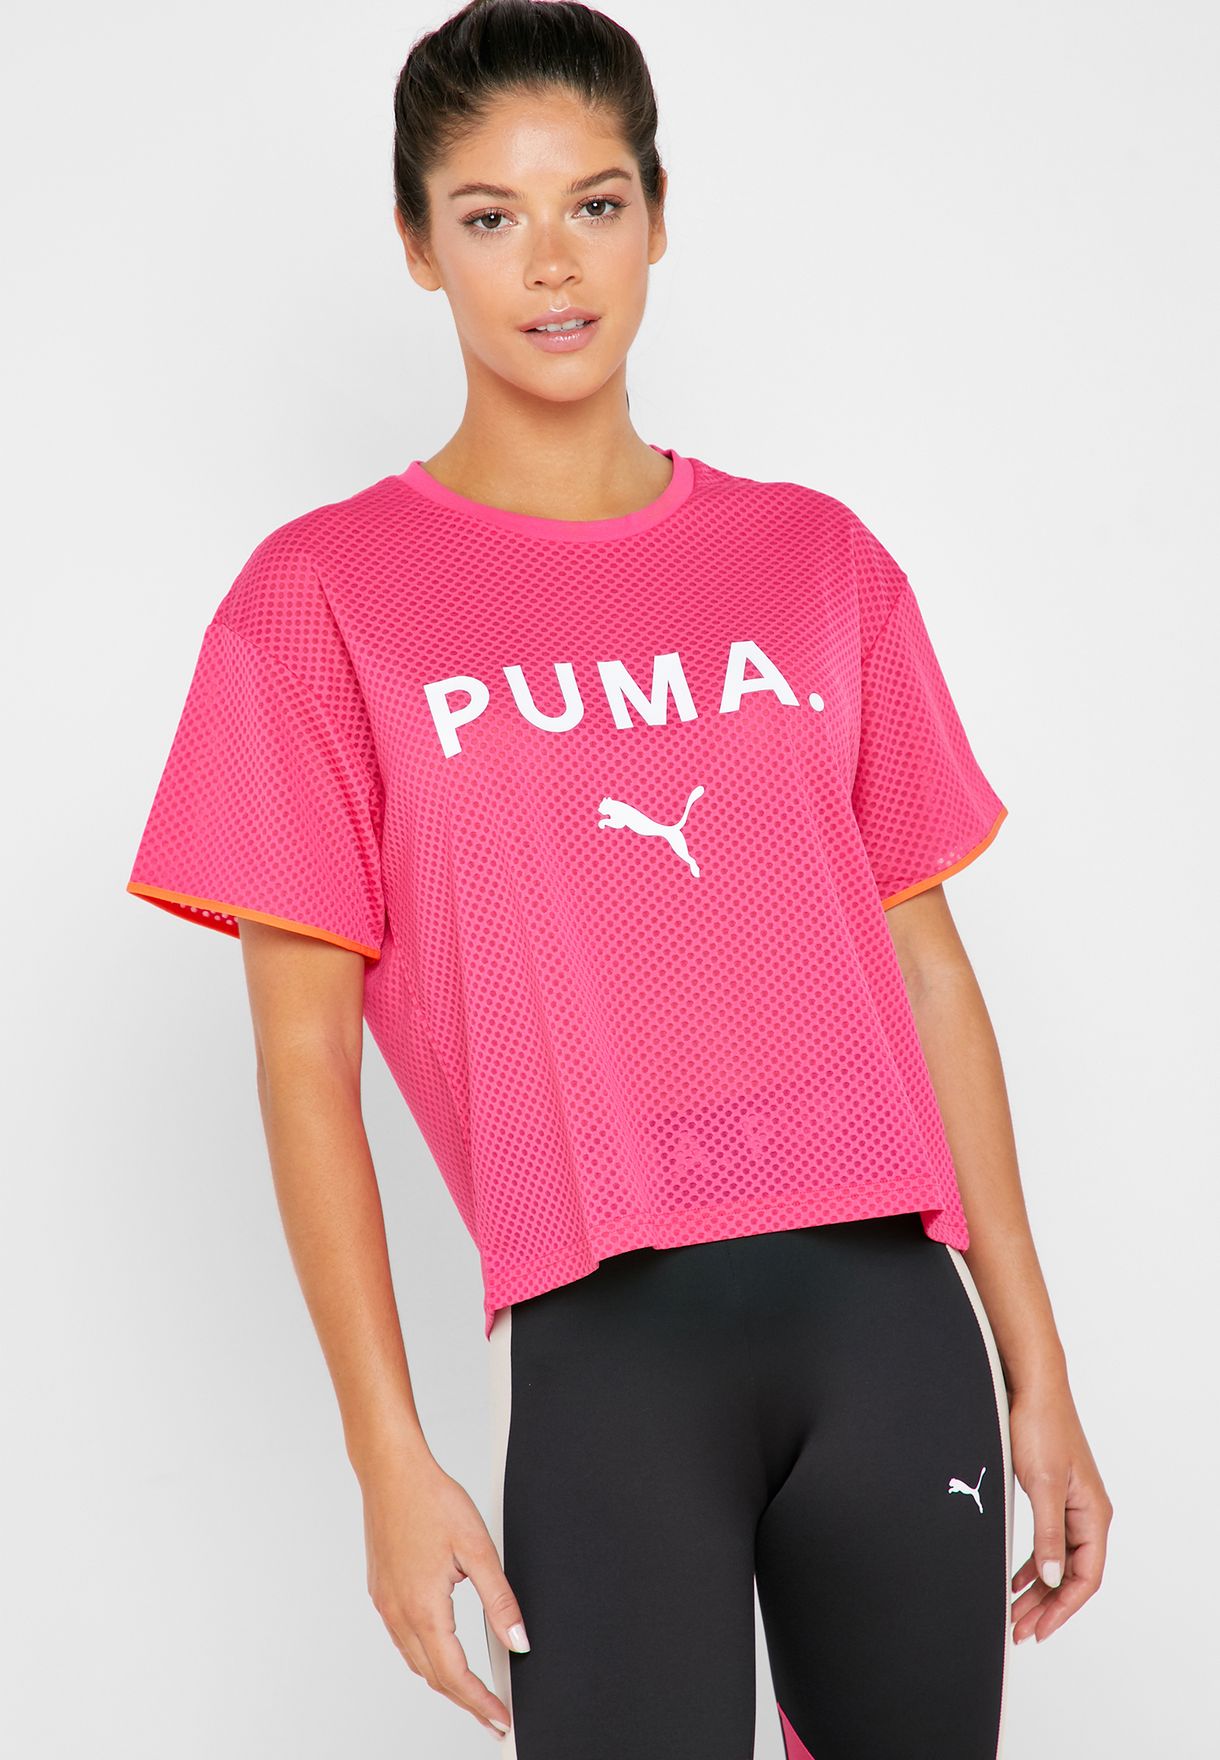 puma mesh t shirt